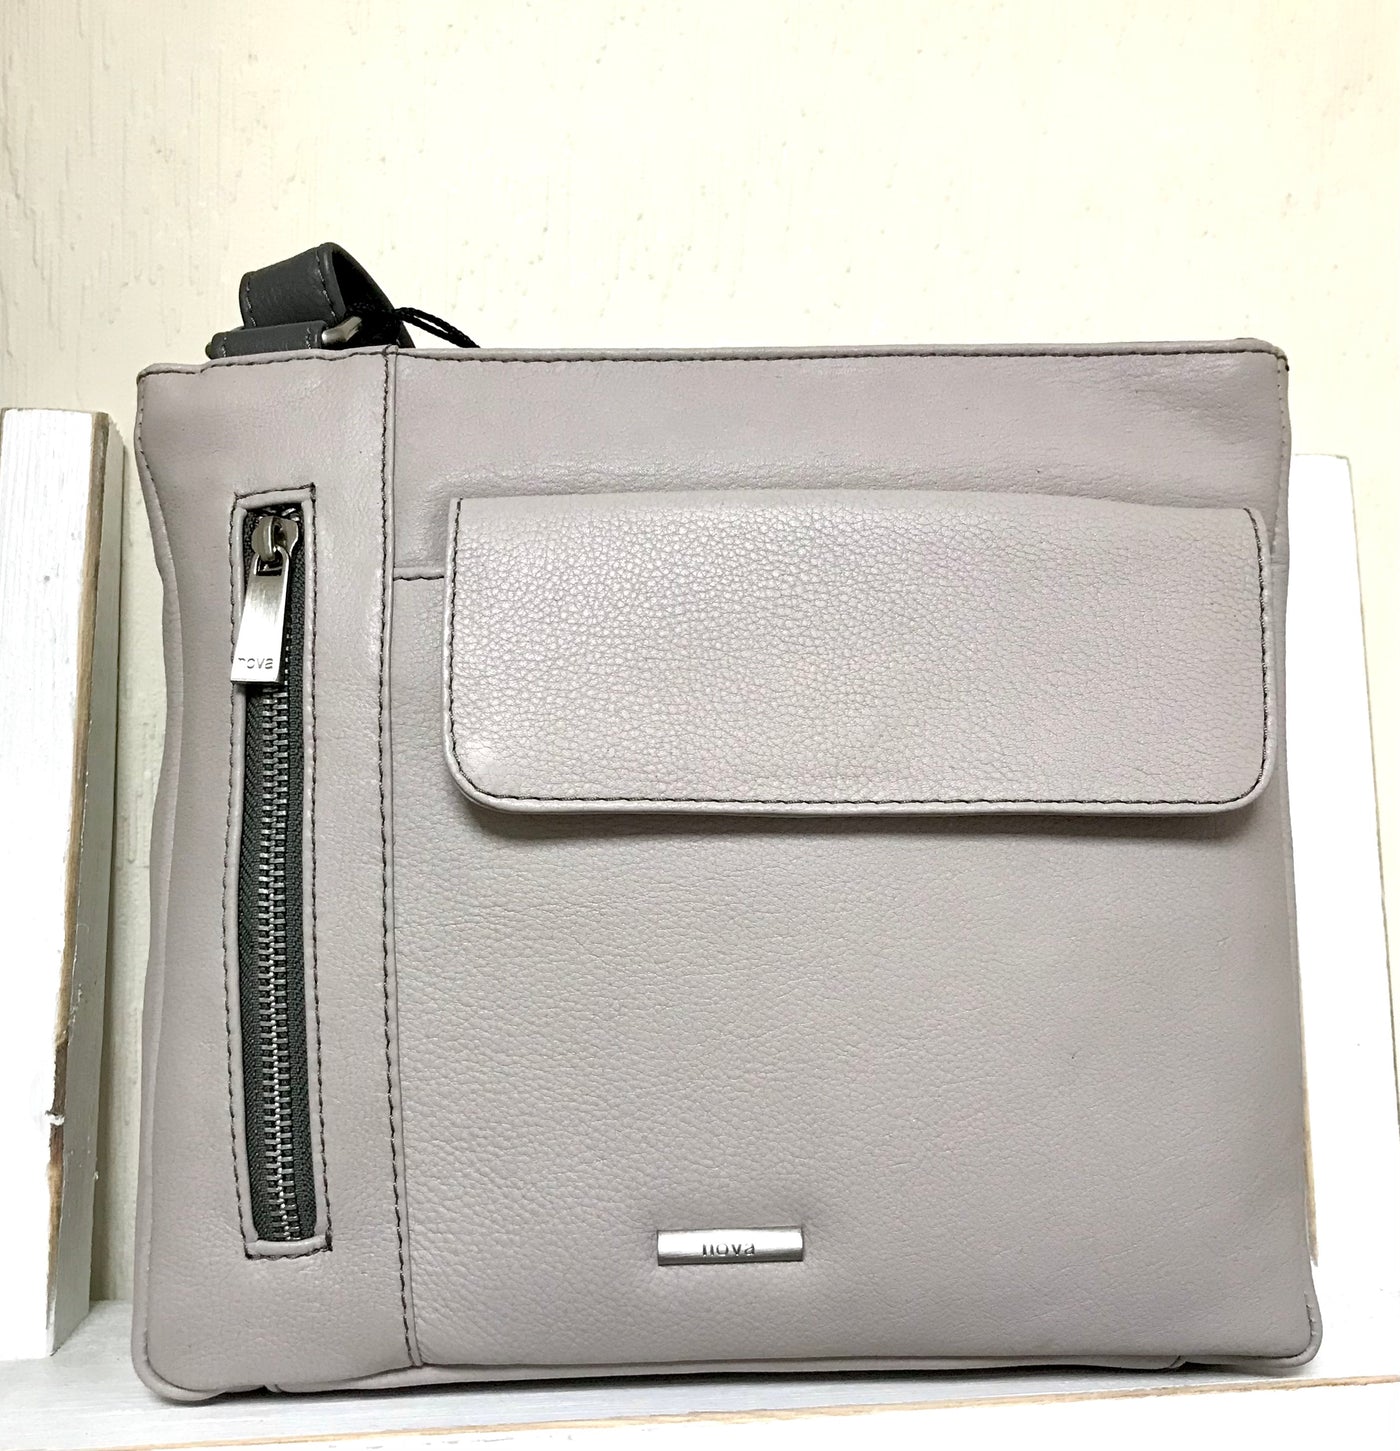 Nova Leathers Zip & Pocket Crossbody Handbag - Dove Grey & Charcoal Grey (899S)